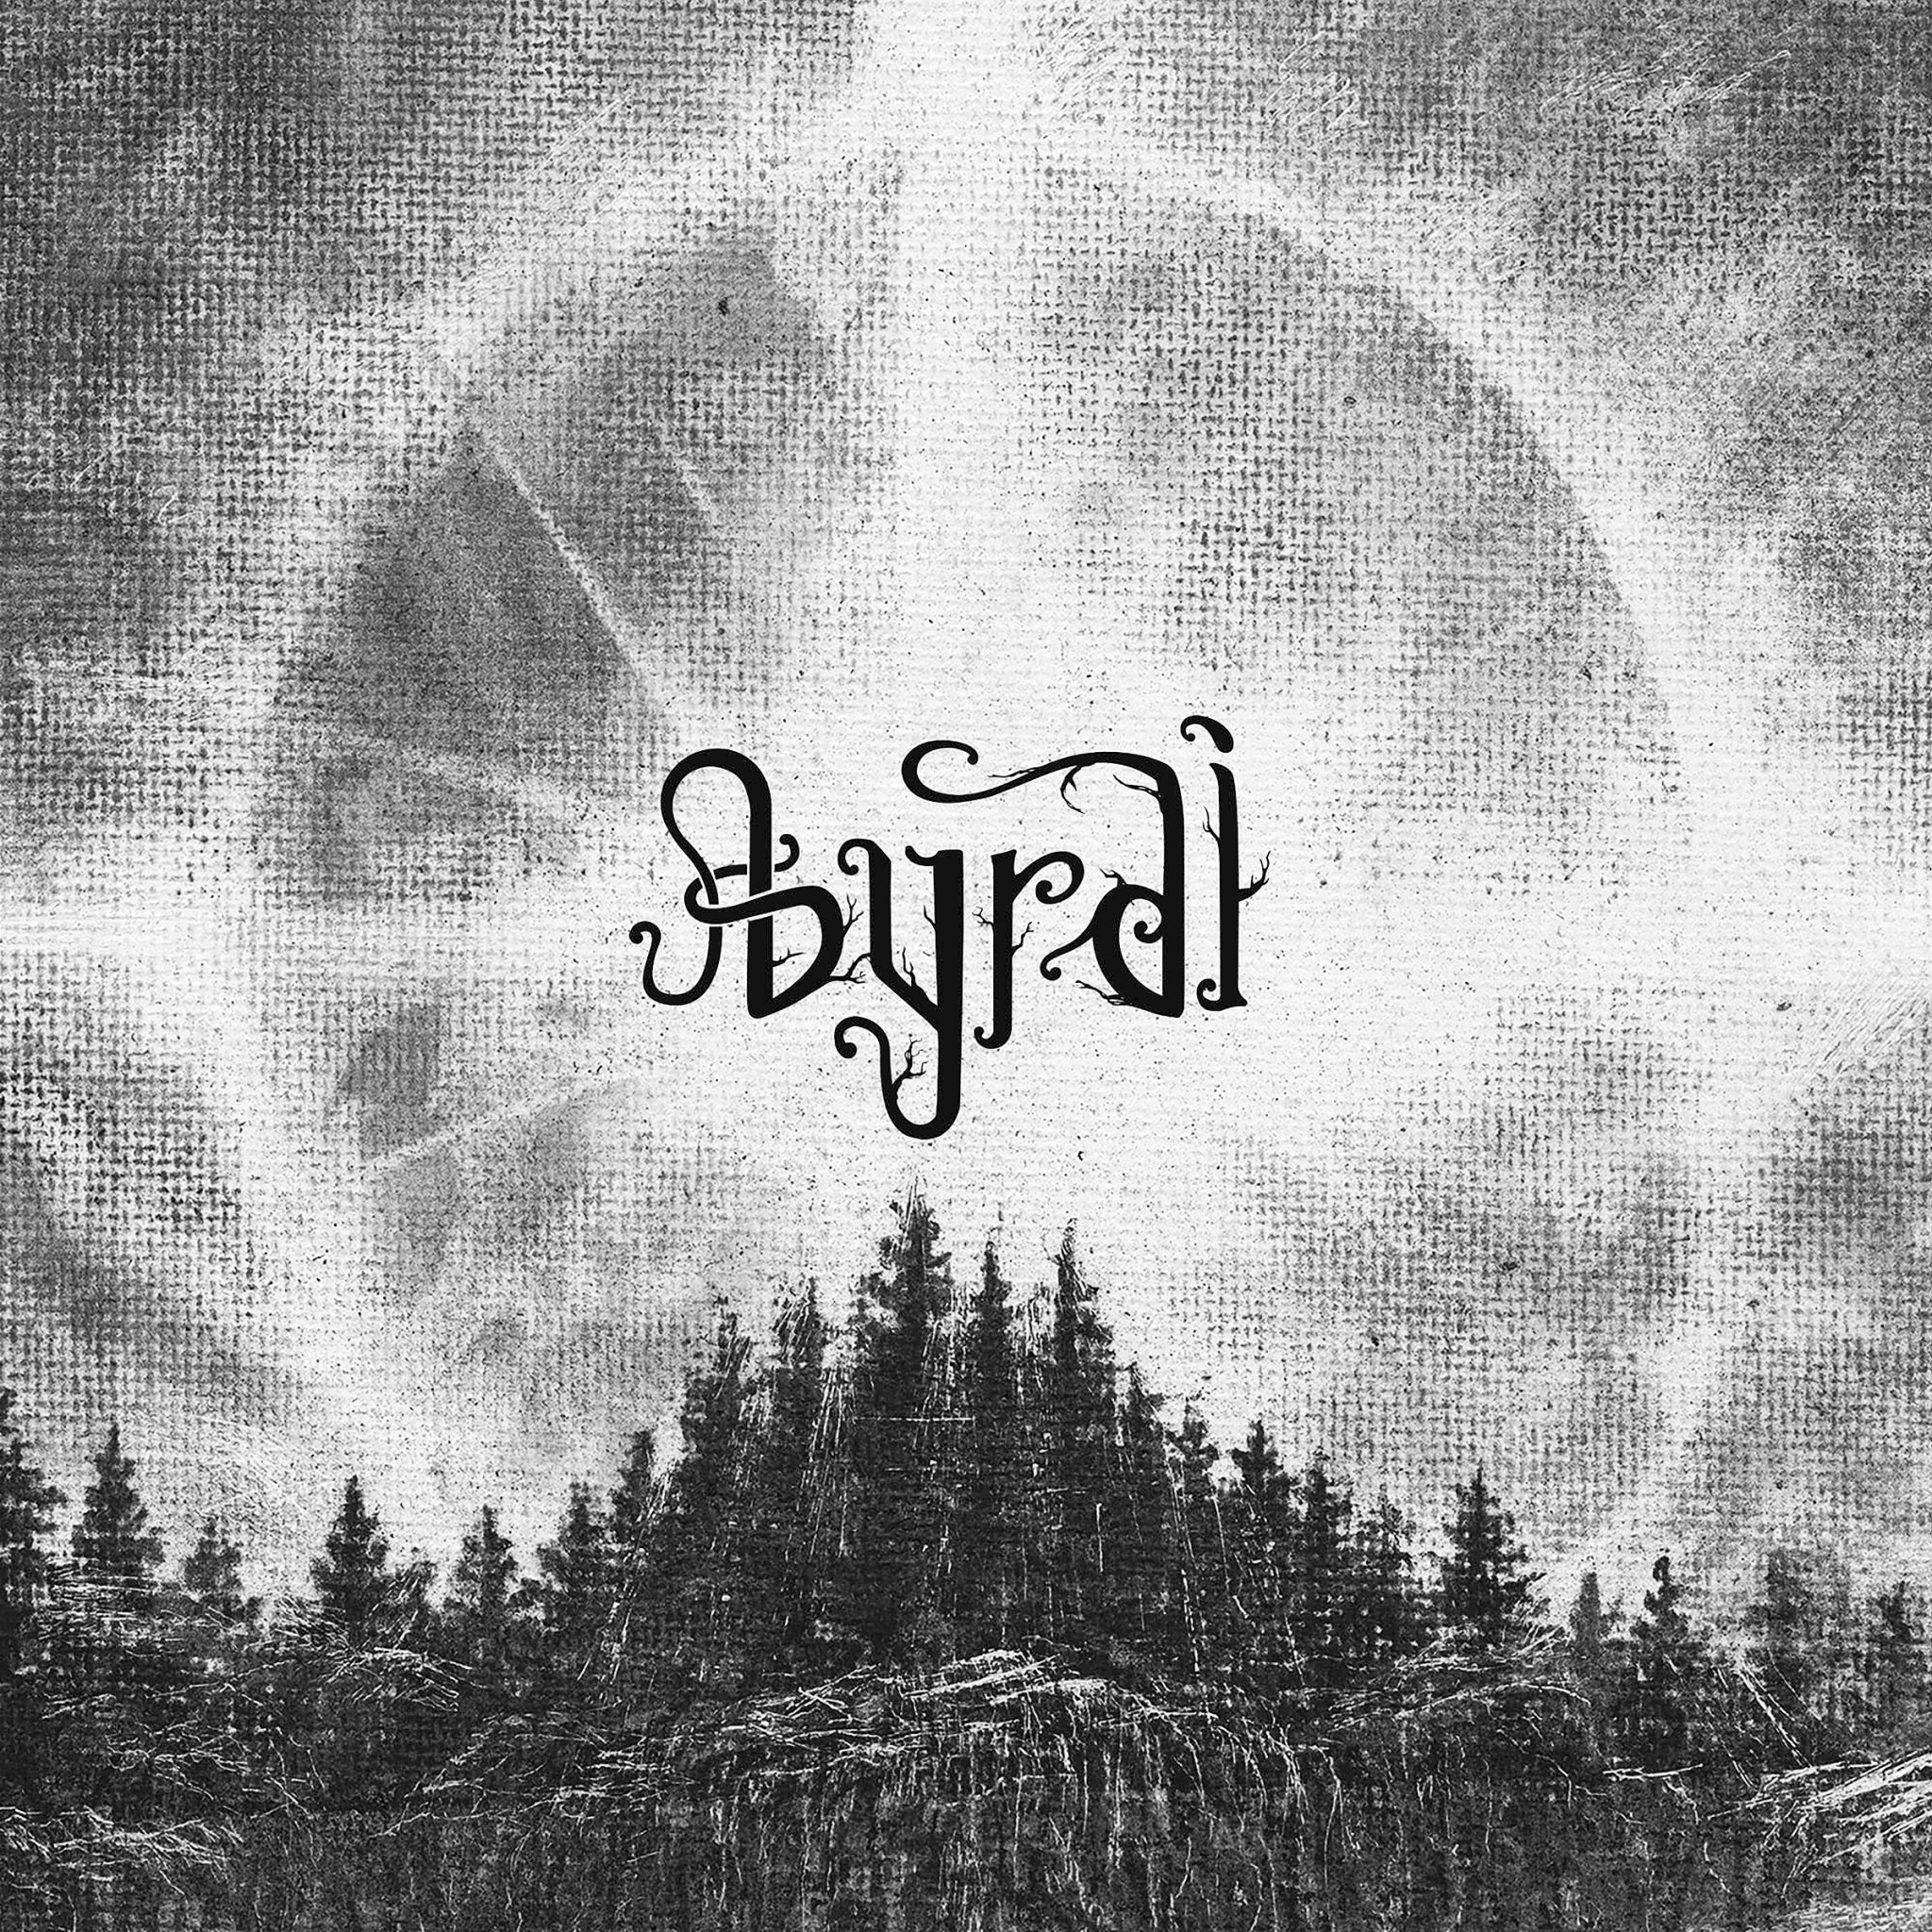 byrdi-byrjing-album-cover-poster-lost-posters